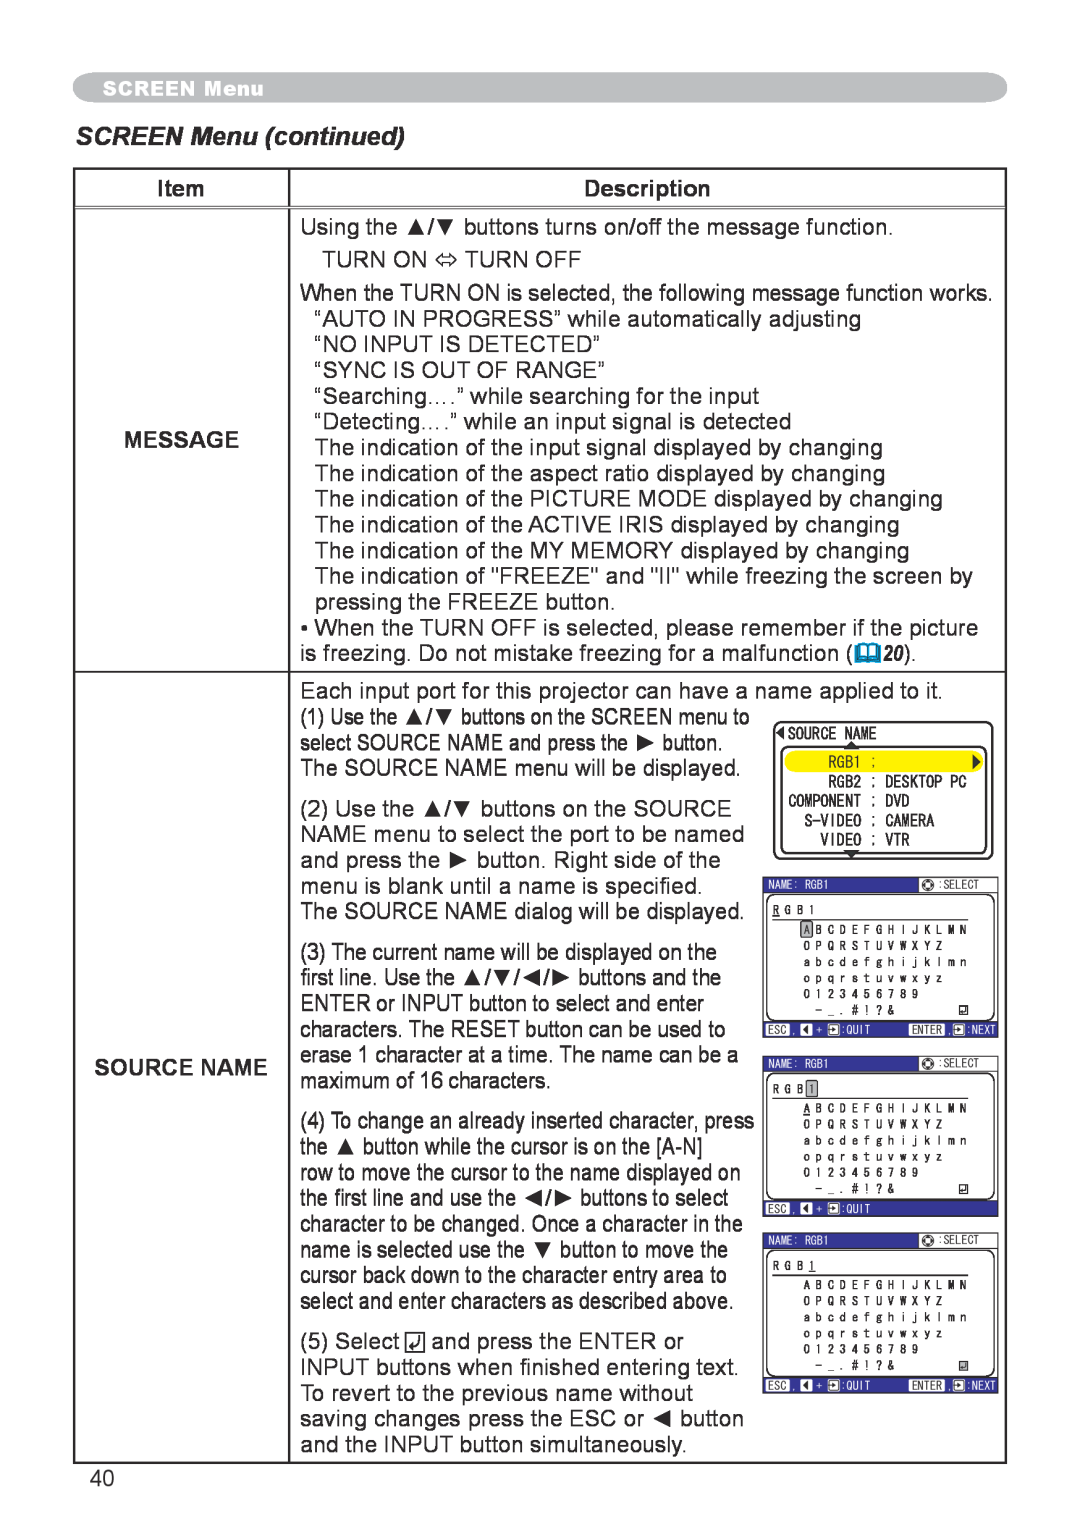 Hitachi CP-X600 user manual SCREEN Menu continued, Description, Message, Source Name 